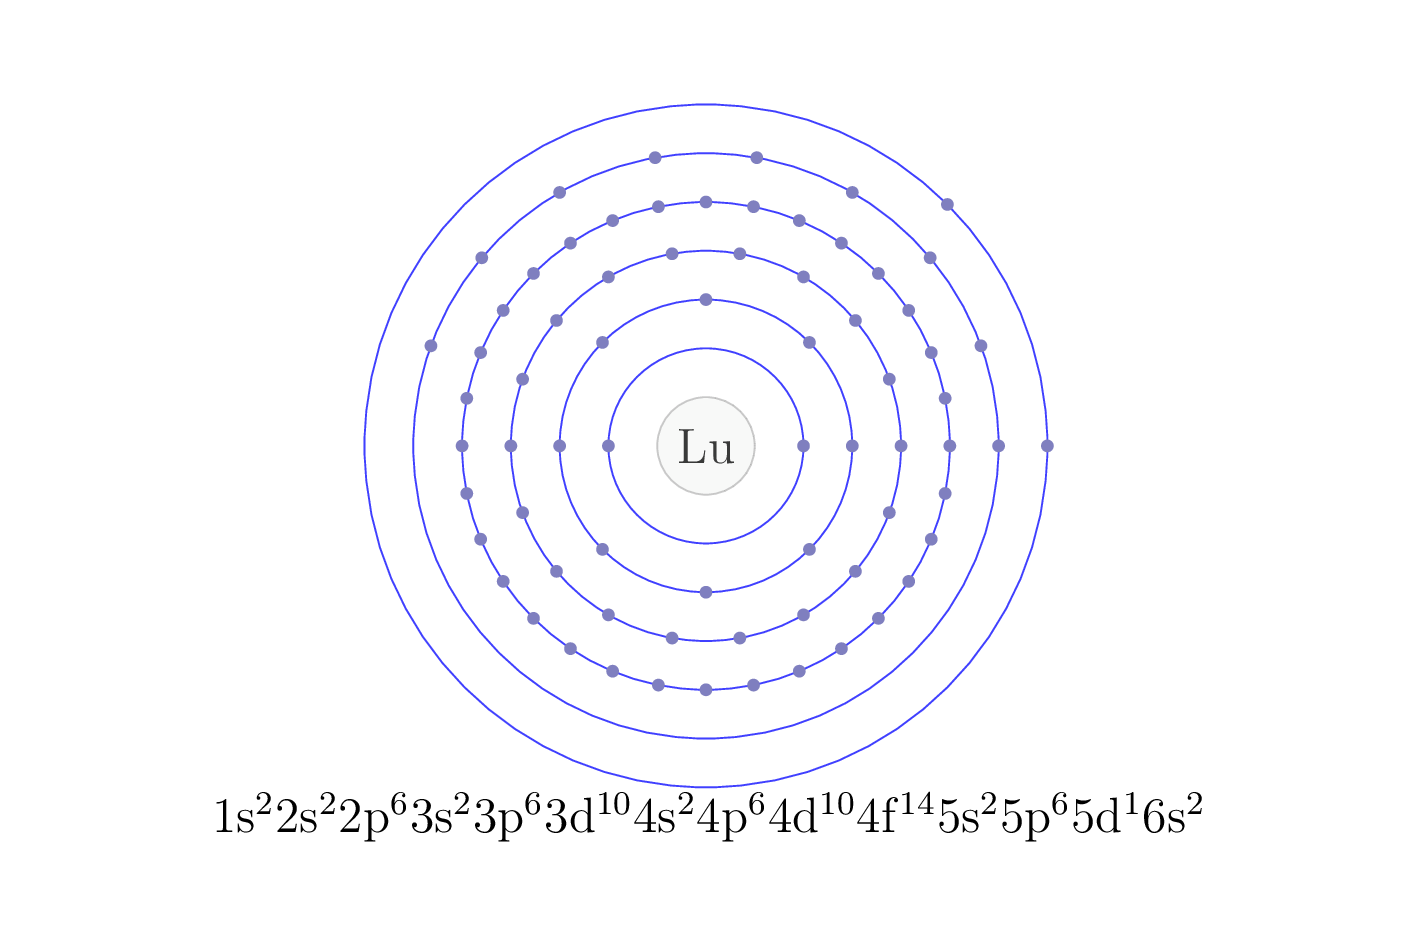 electron configuration of element Lu